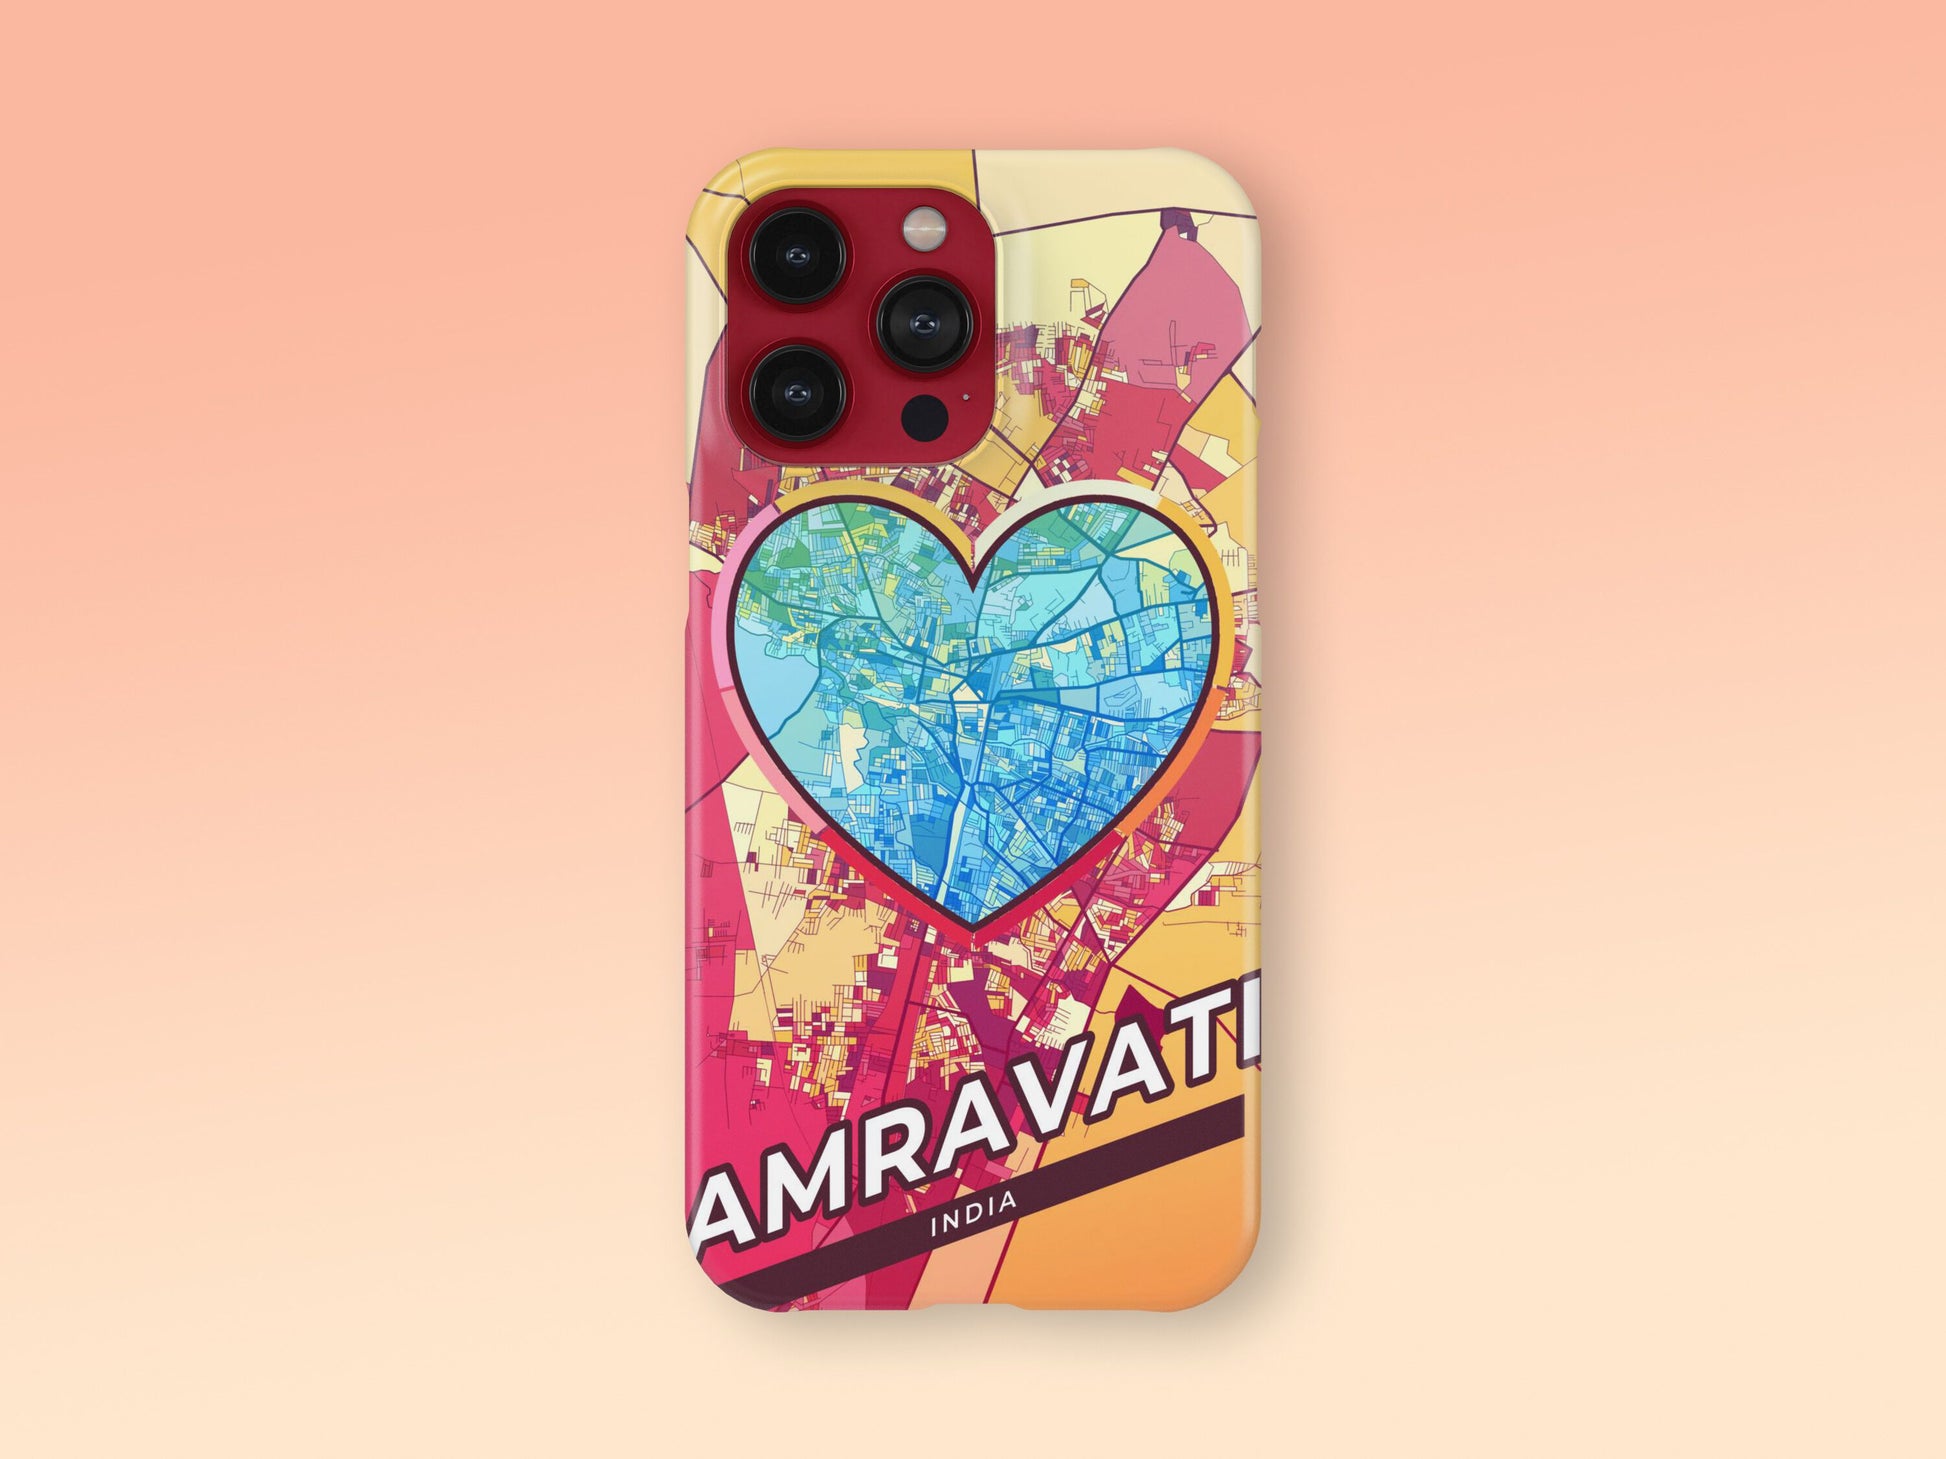 Amravati India slim phone case with colorful icon. Birthday, wedding or housewarming gift. Couple match cases. 2